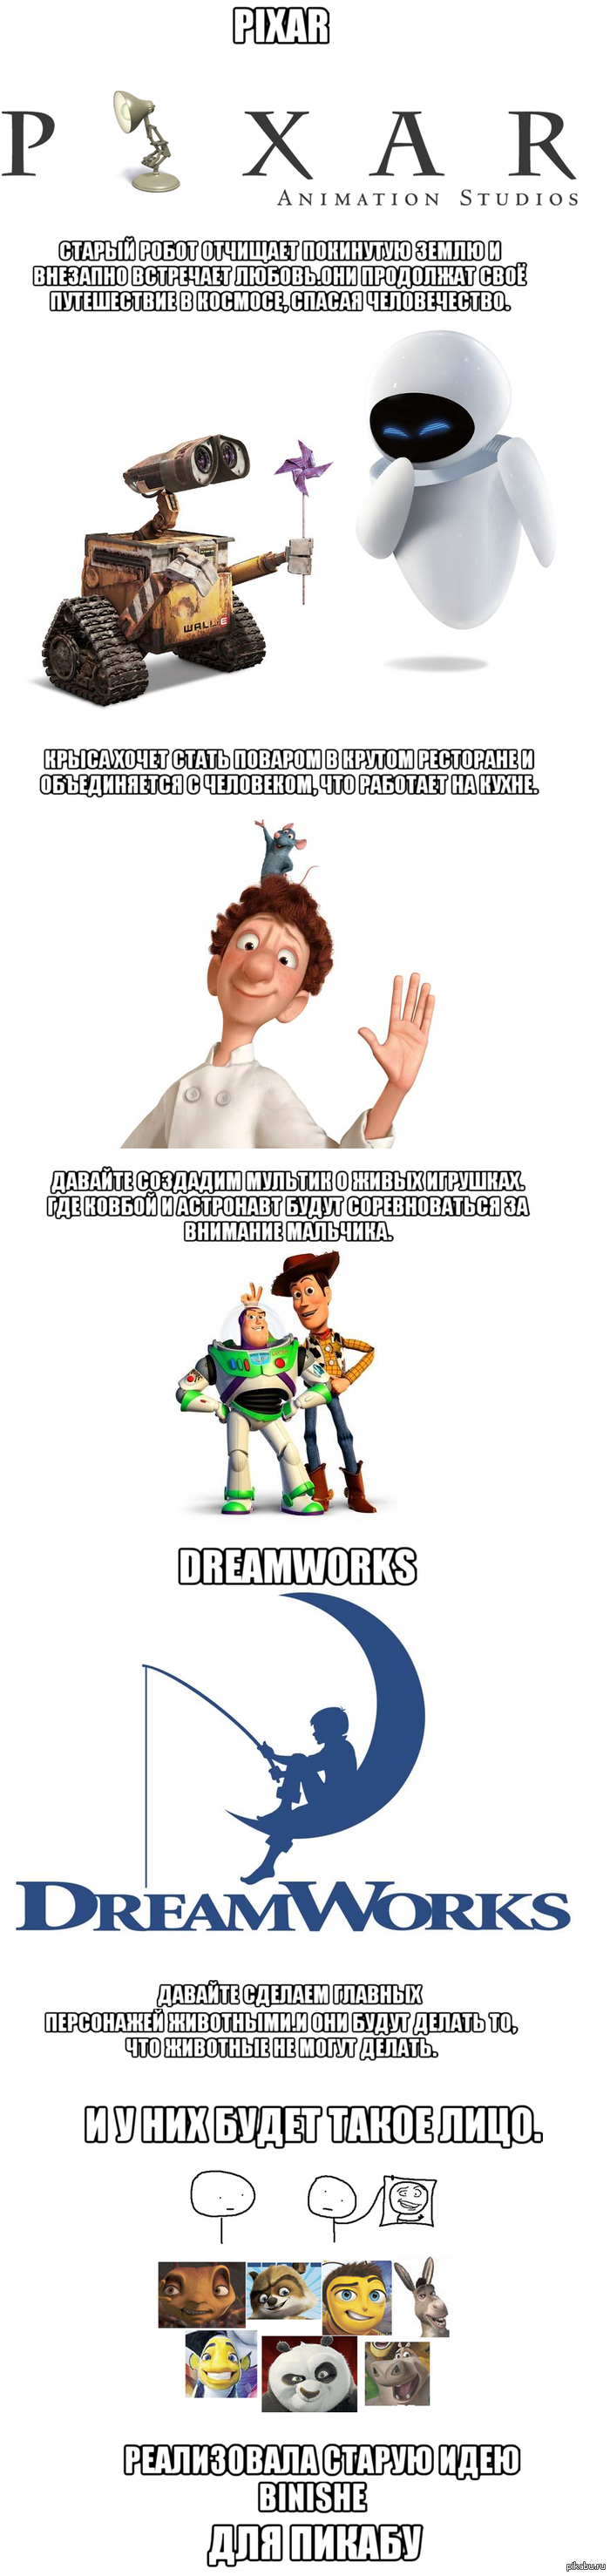 DreamWorks vs Pixar   DreamWorks  